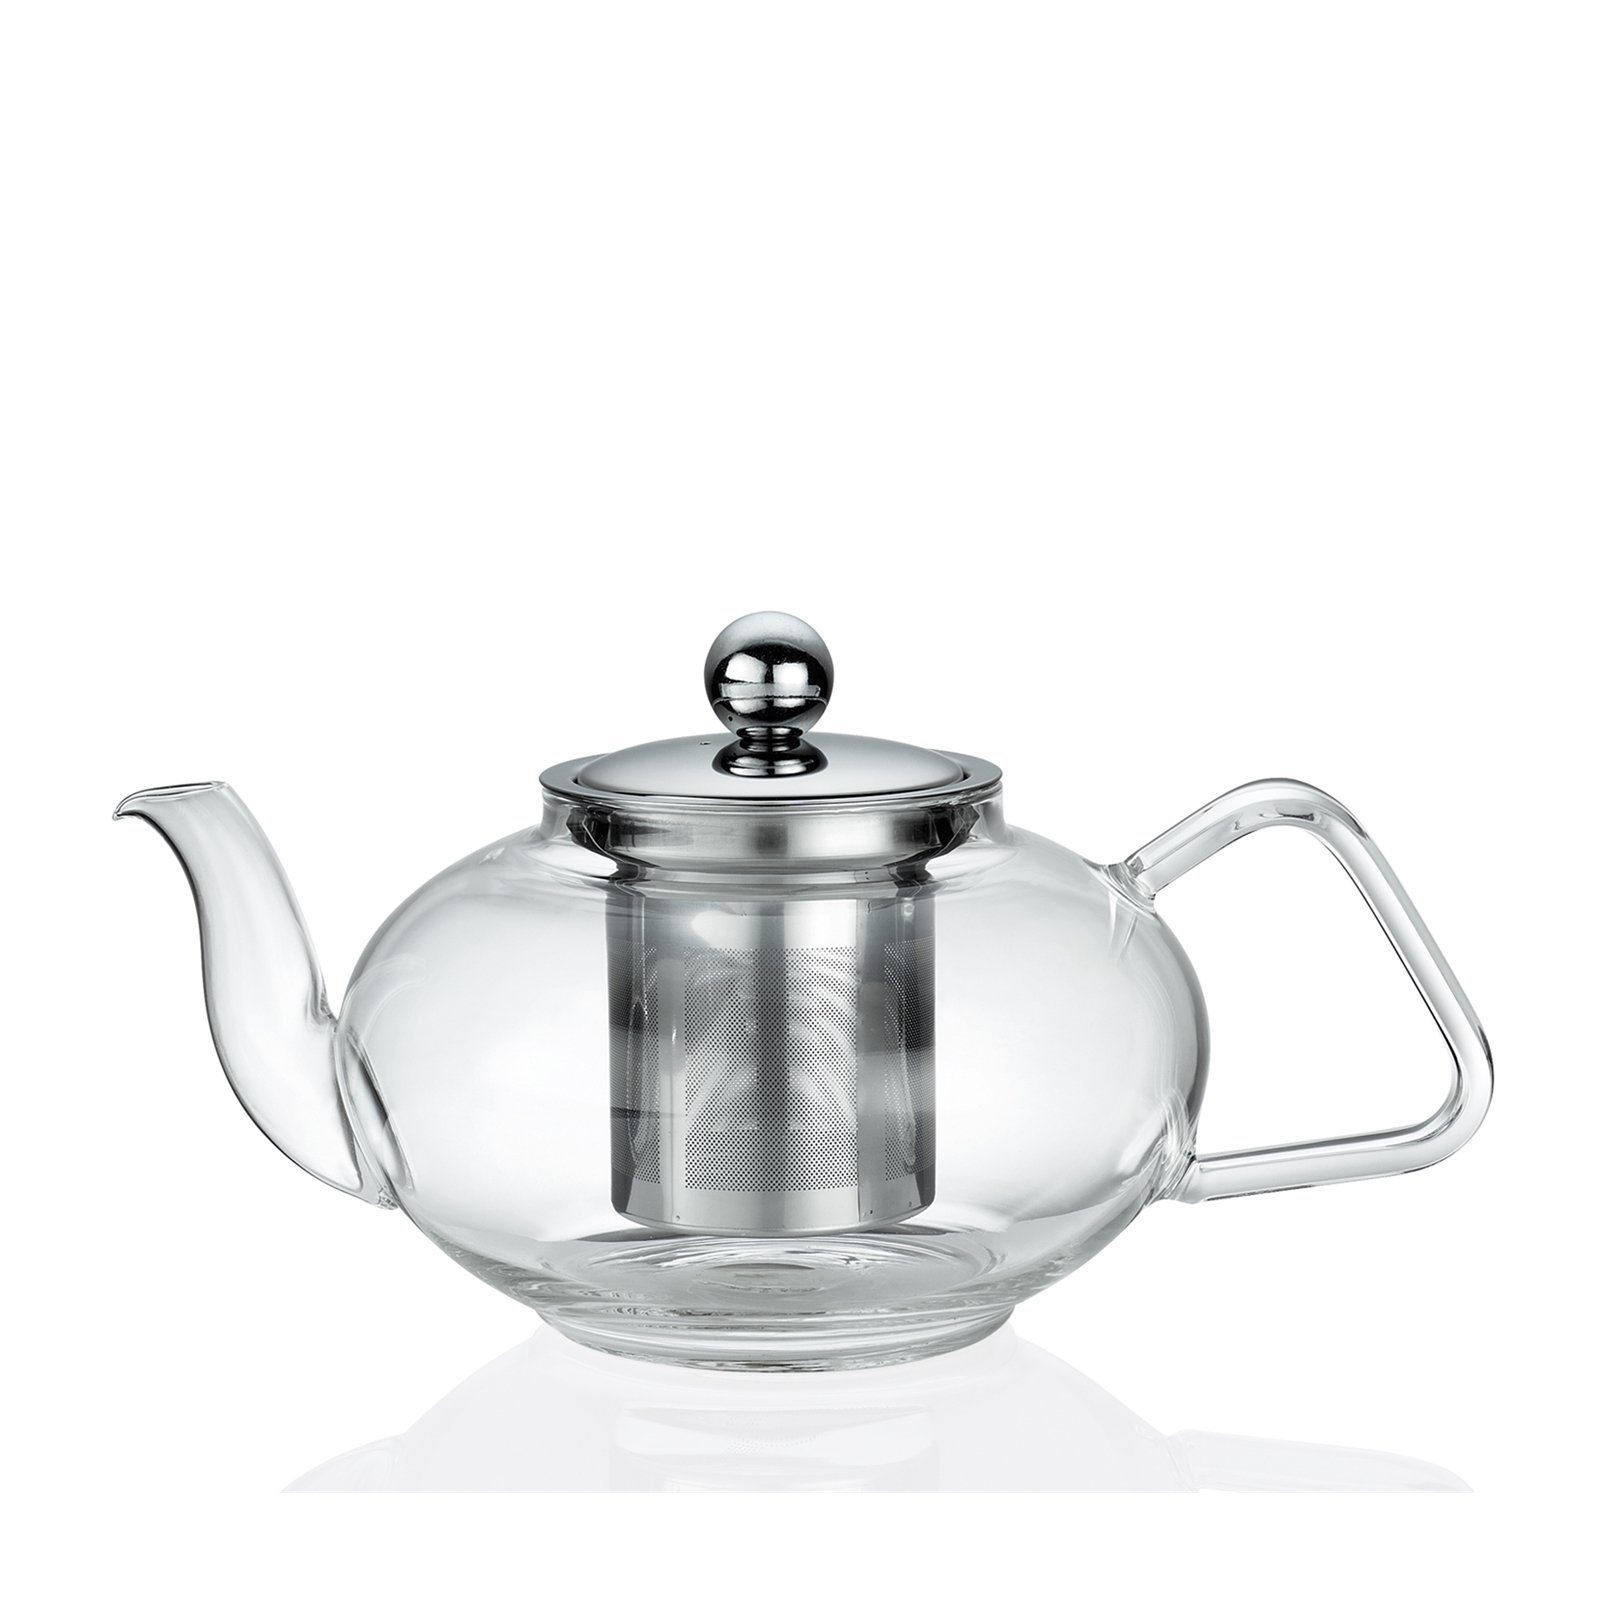 Küchenprofi Teekanne Teekanne Tibet l 0.8 Tea